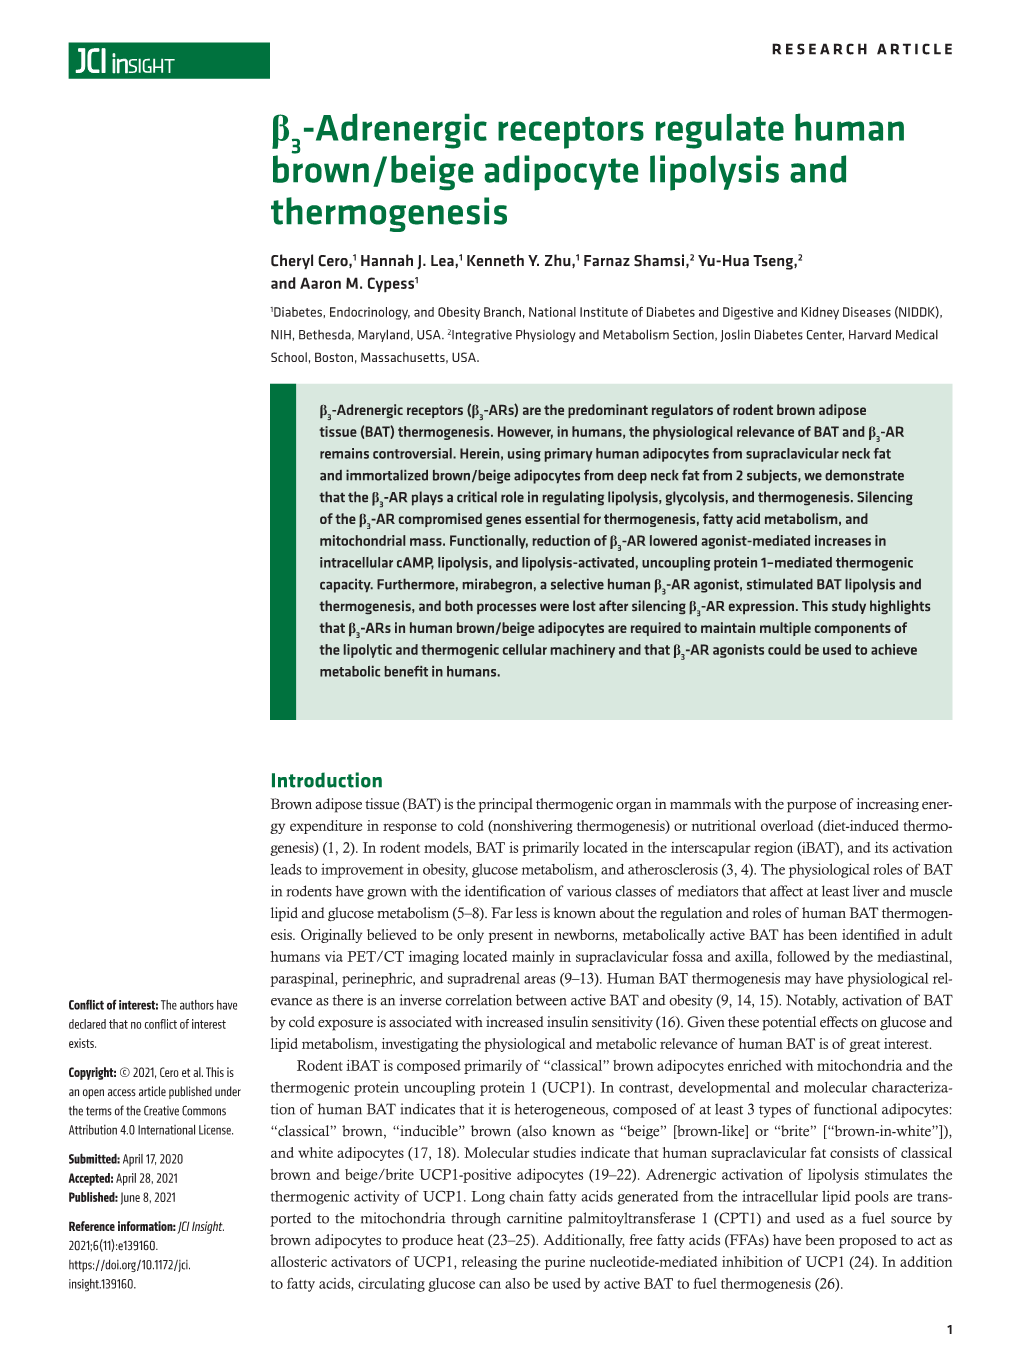 Adrenergic Receptors Regulate Human Brown/Beige Adipocyte Lipolysis and Thermogenesis